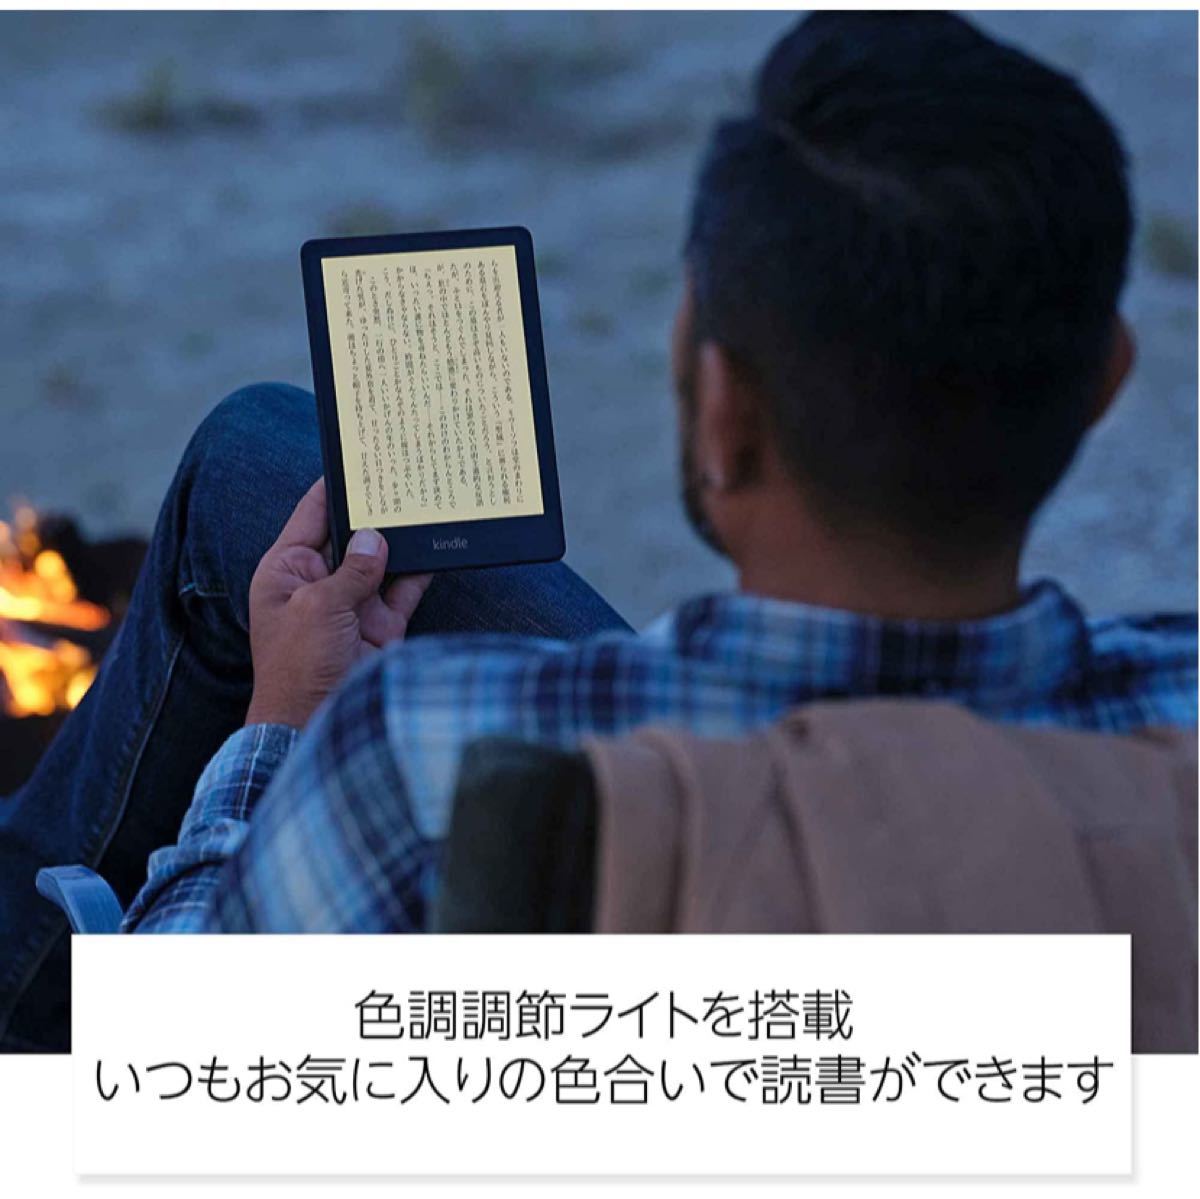 【NEWモデル】Kindle Paperwhite (8GB) 6.8インチディスプレイ 色調調節ライト搭載 広告なし アマゾン